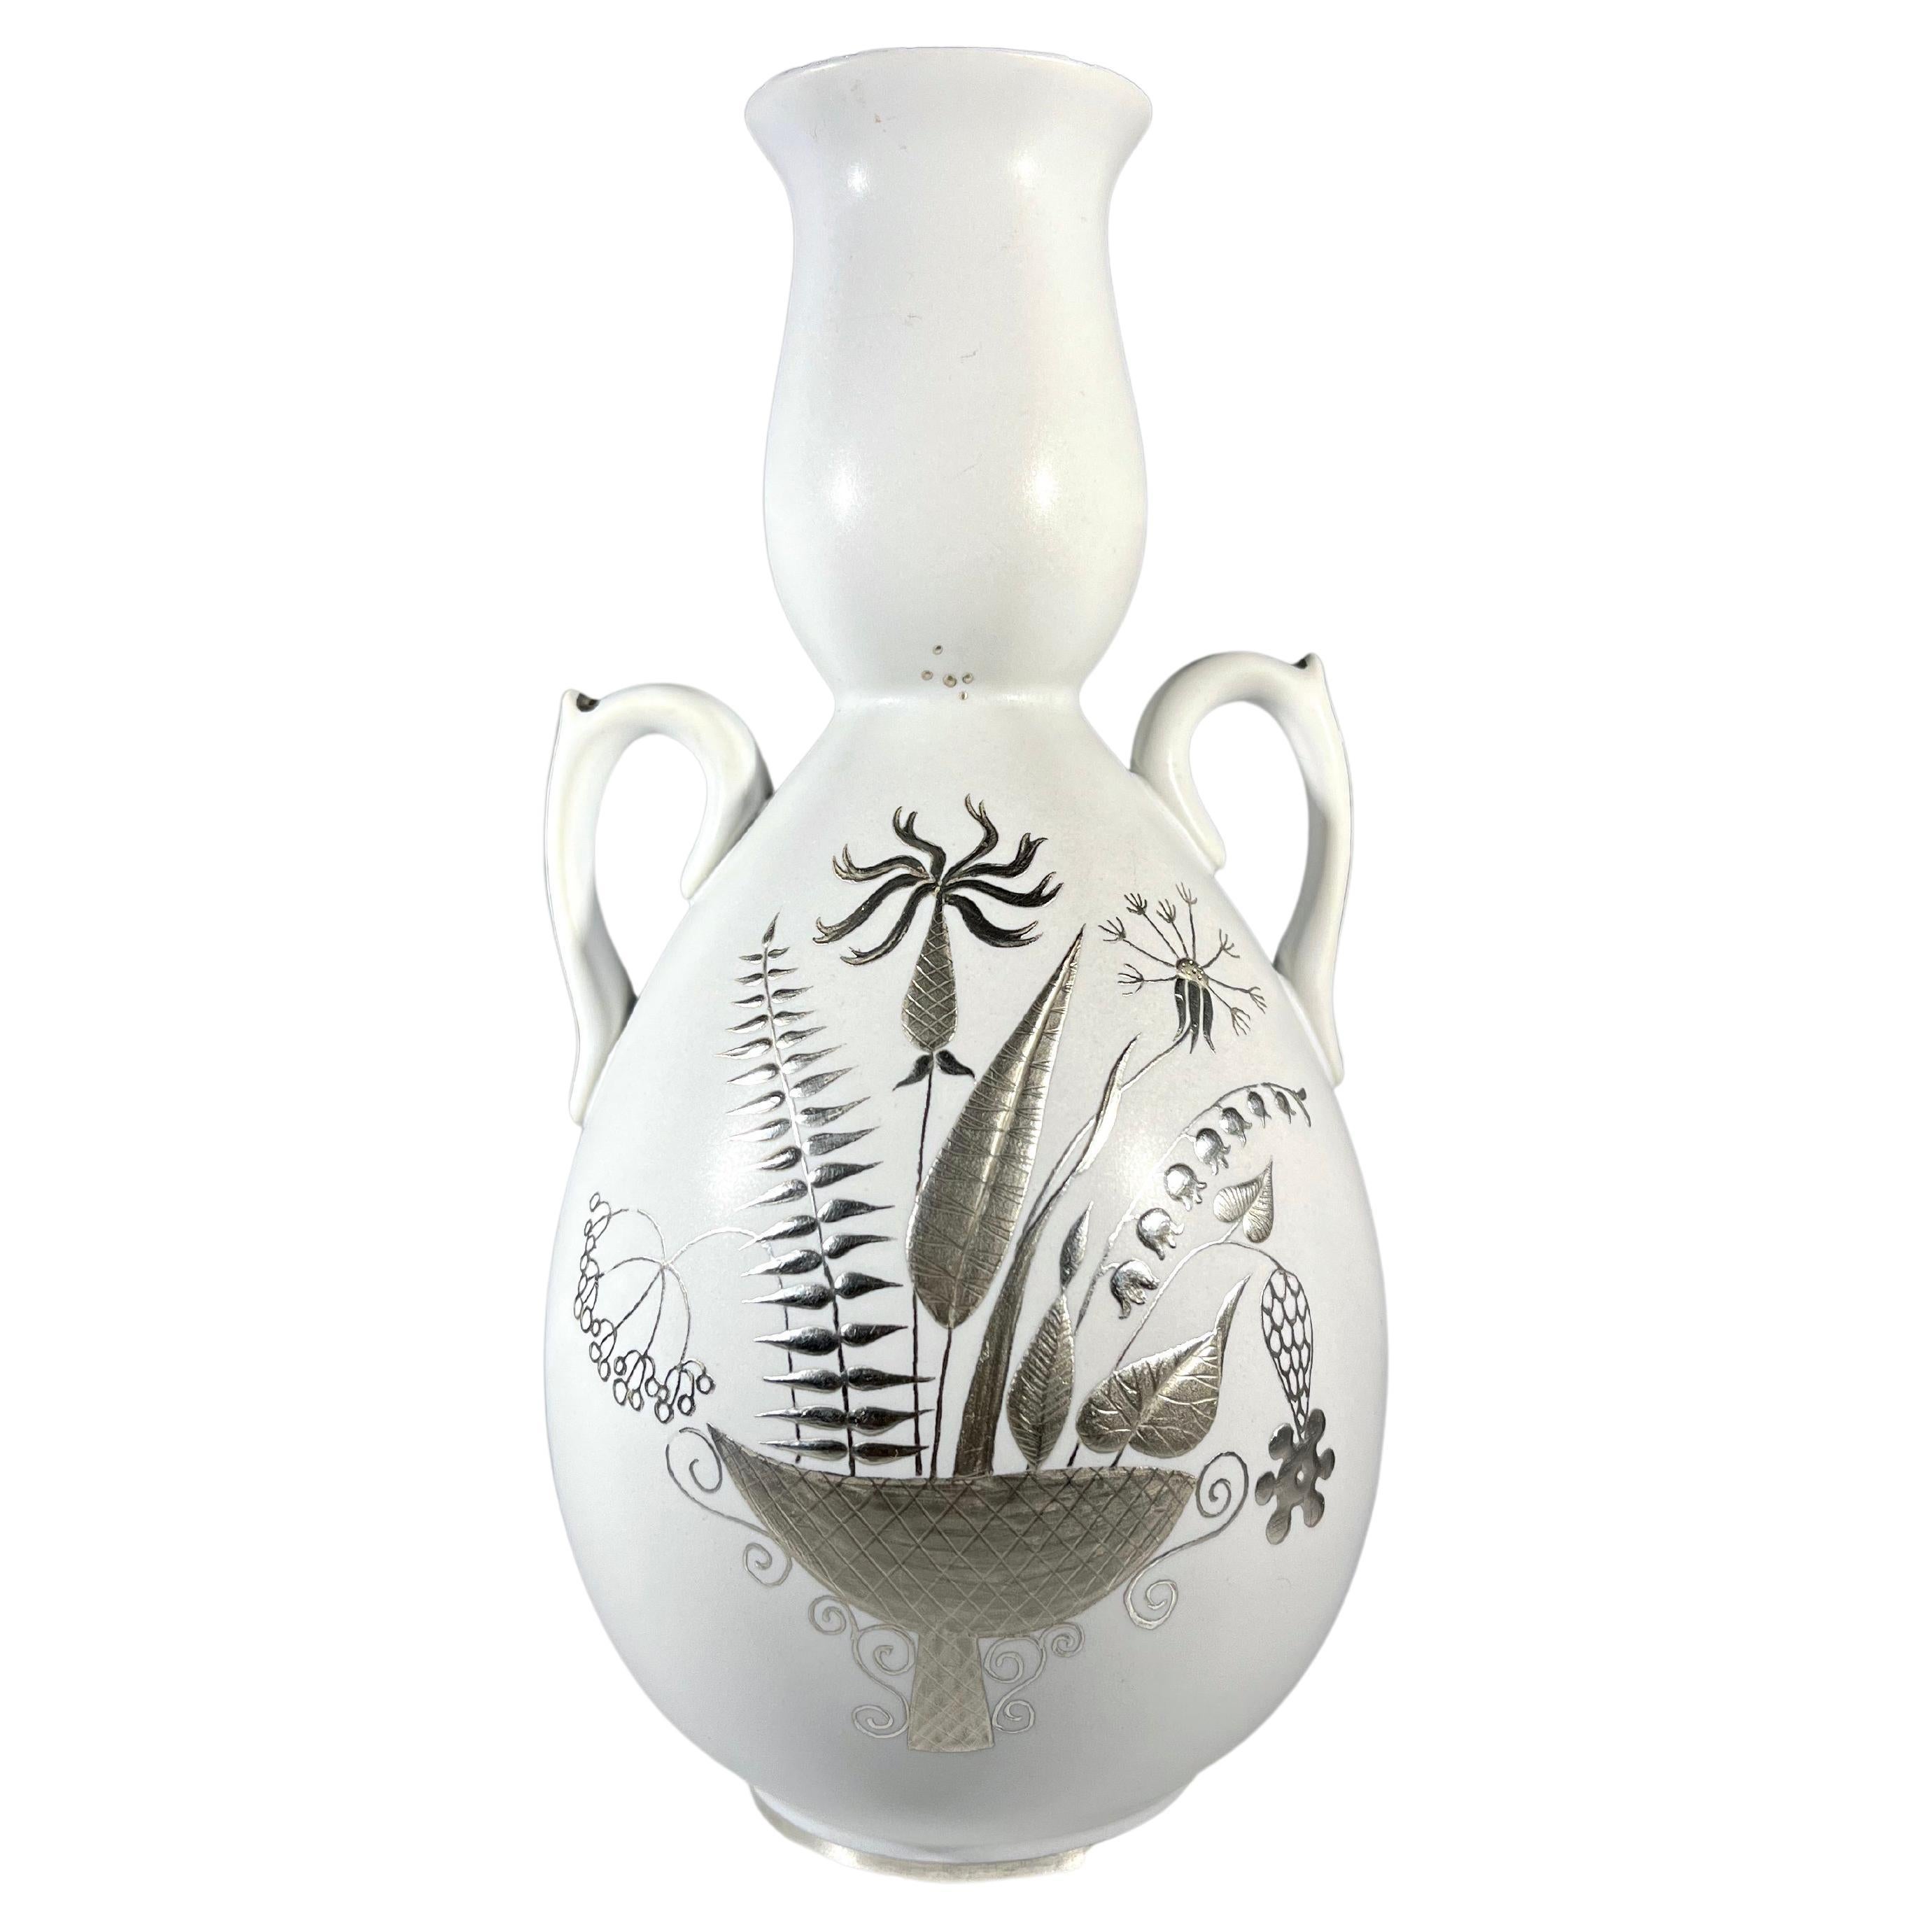 Stig Lindberg - Grazia For Gustavsberg, Applied Silver Stoneware Vase c1946-1950